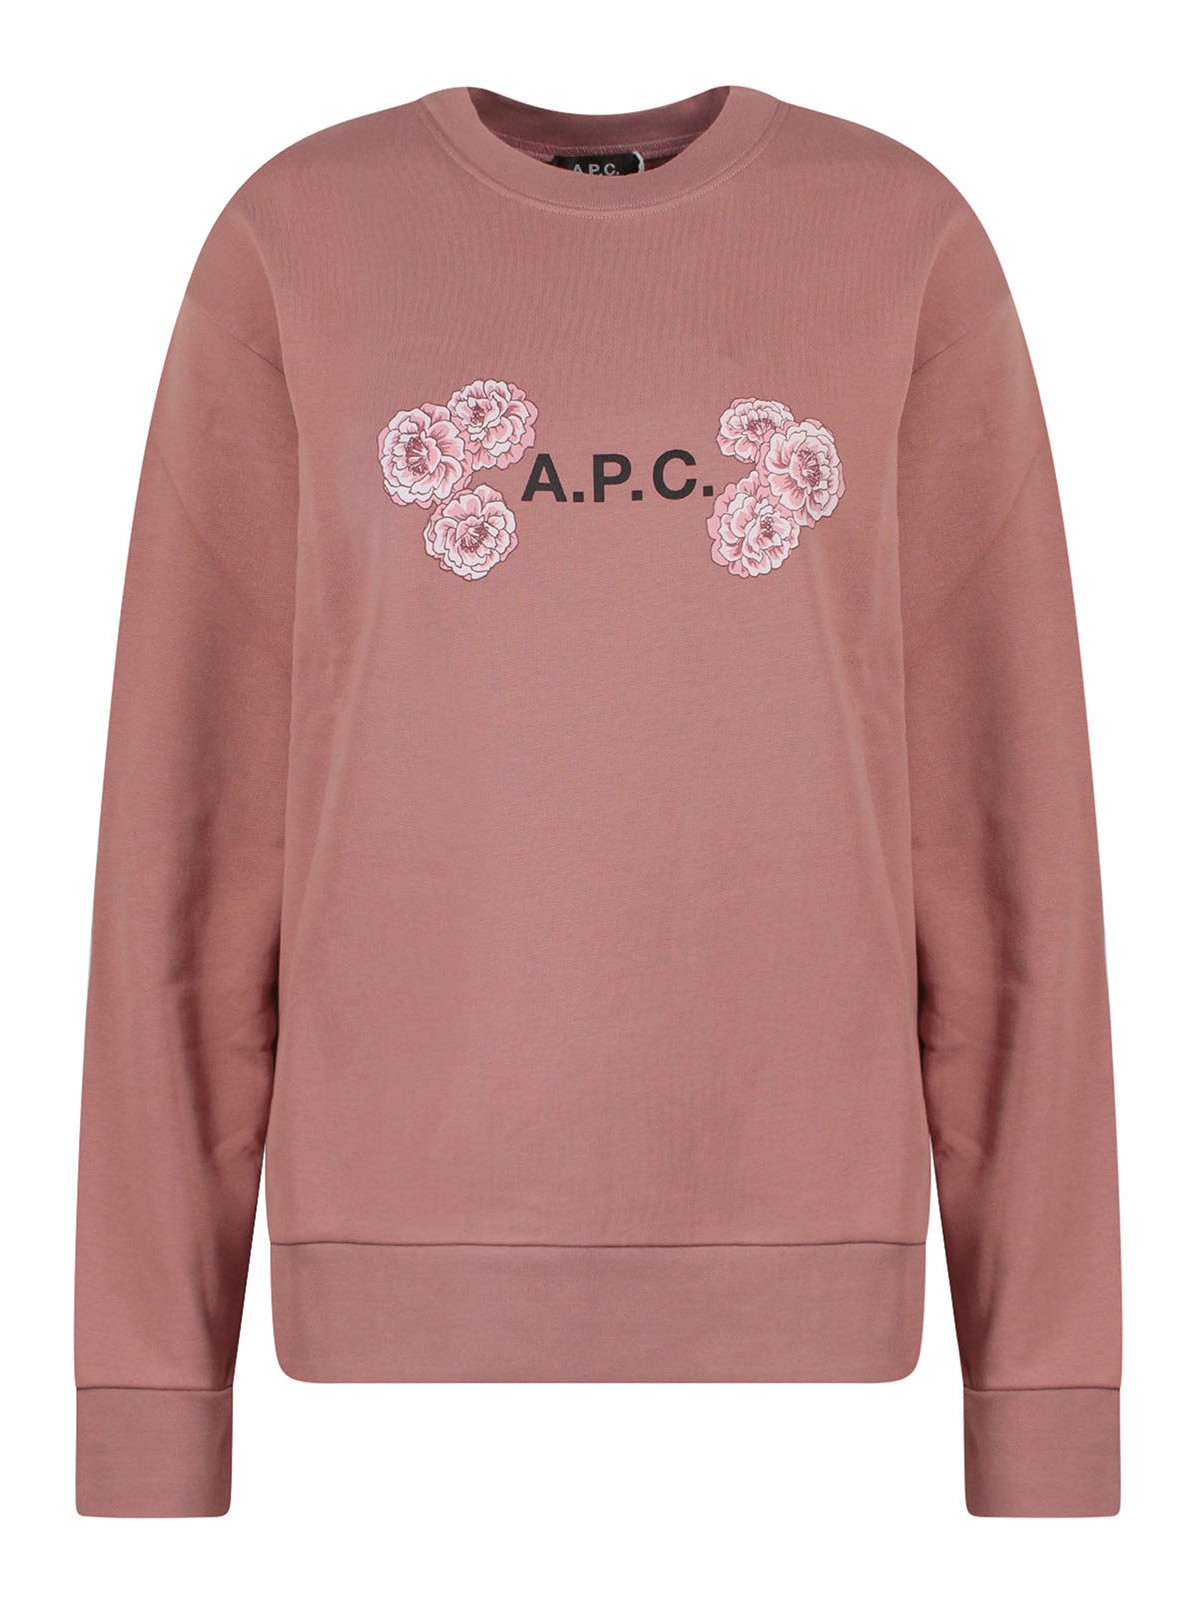 Apc Cotton Sweatshirt With Print In Pink